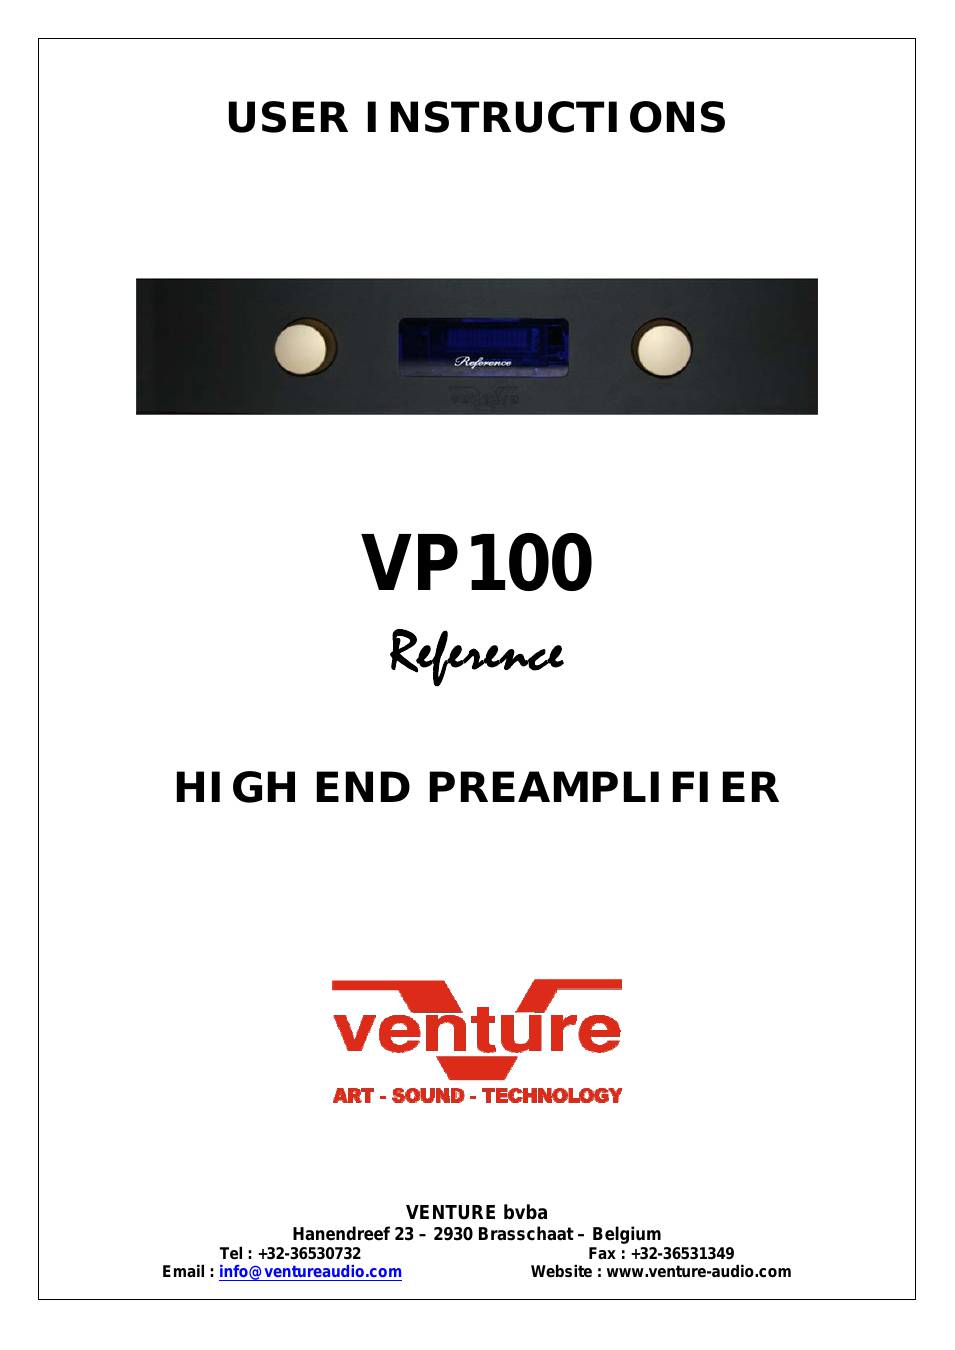 Venture VP100